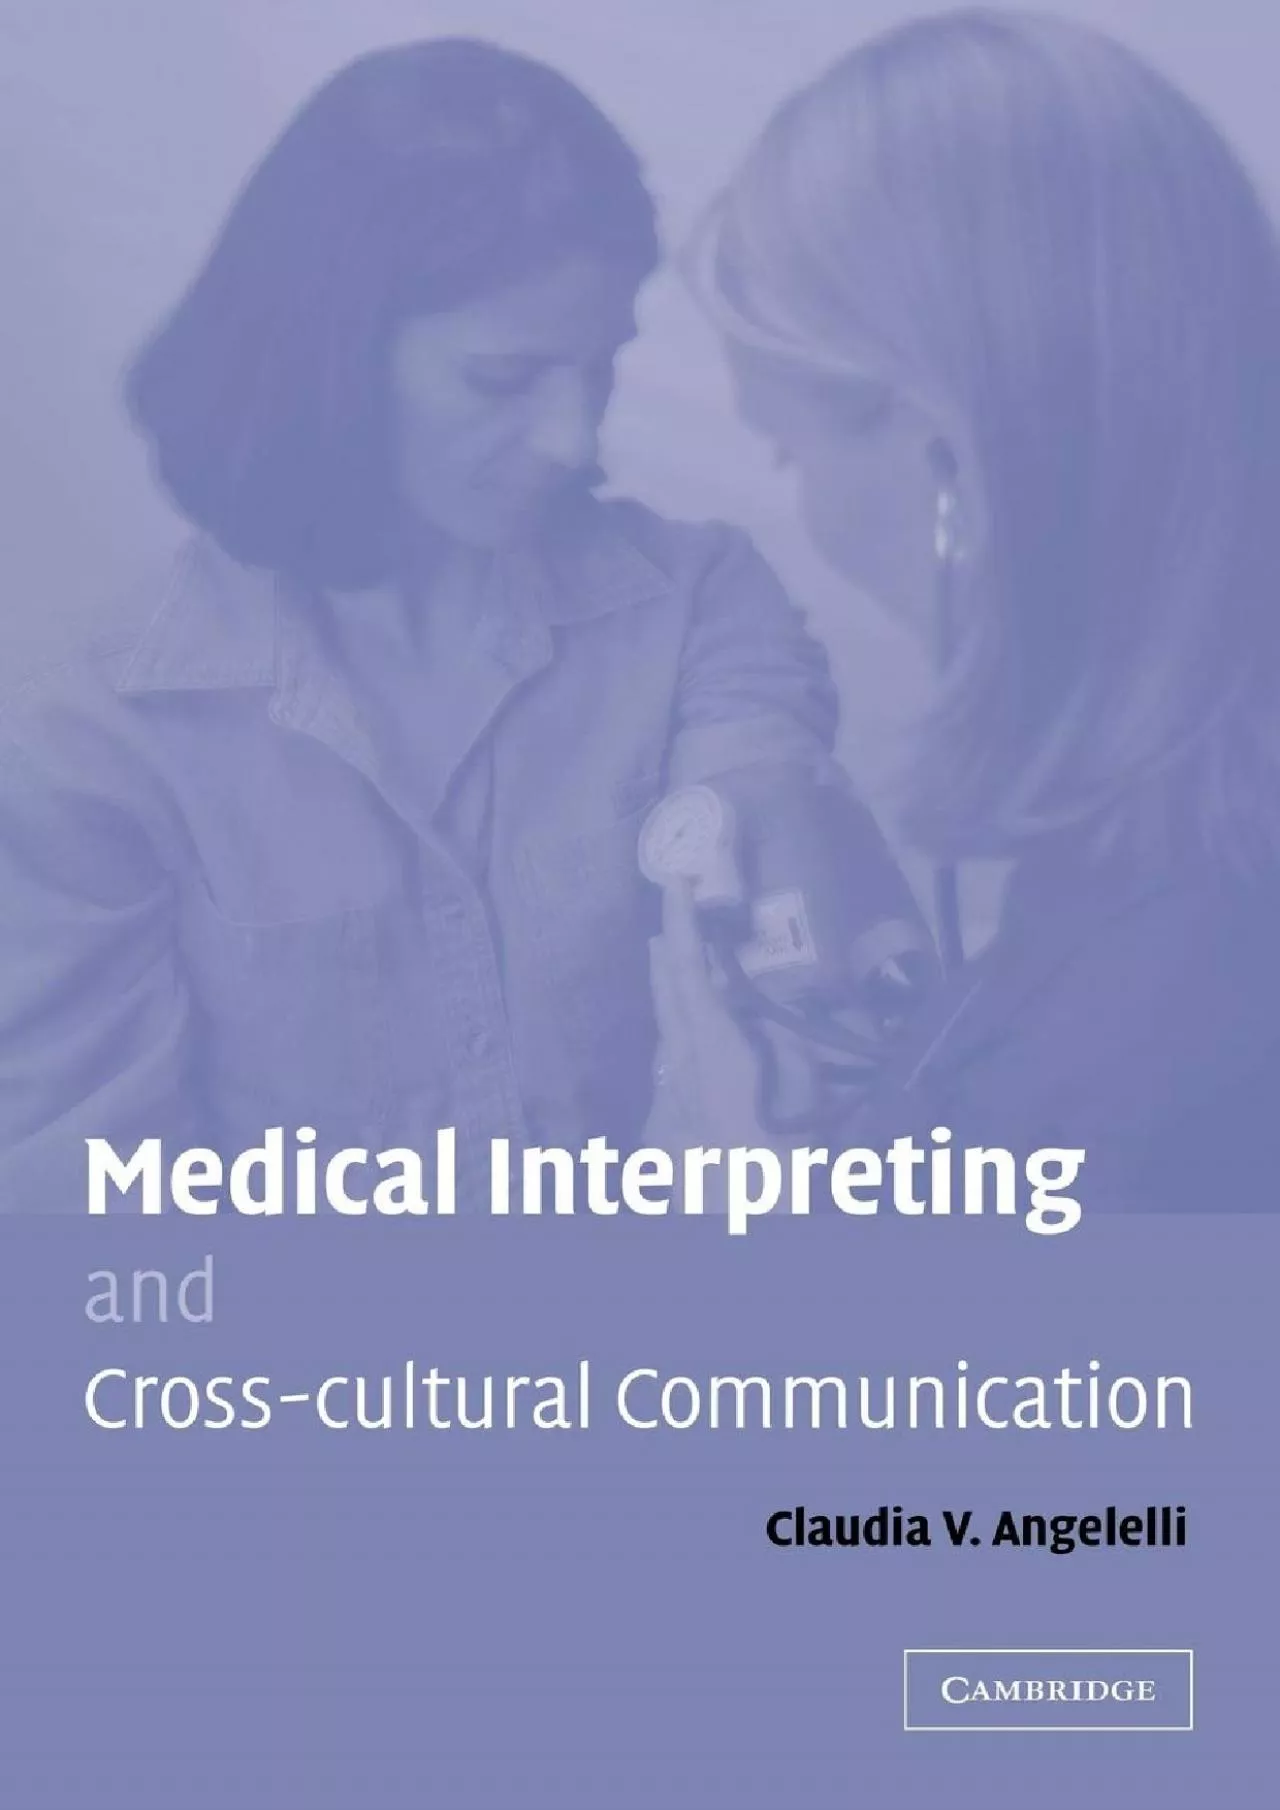 (EBOOK)-Medical Interpreting and Cross-cultural Communication